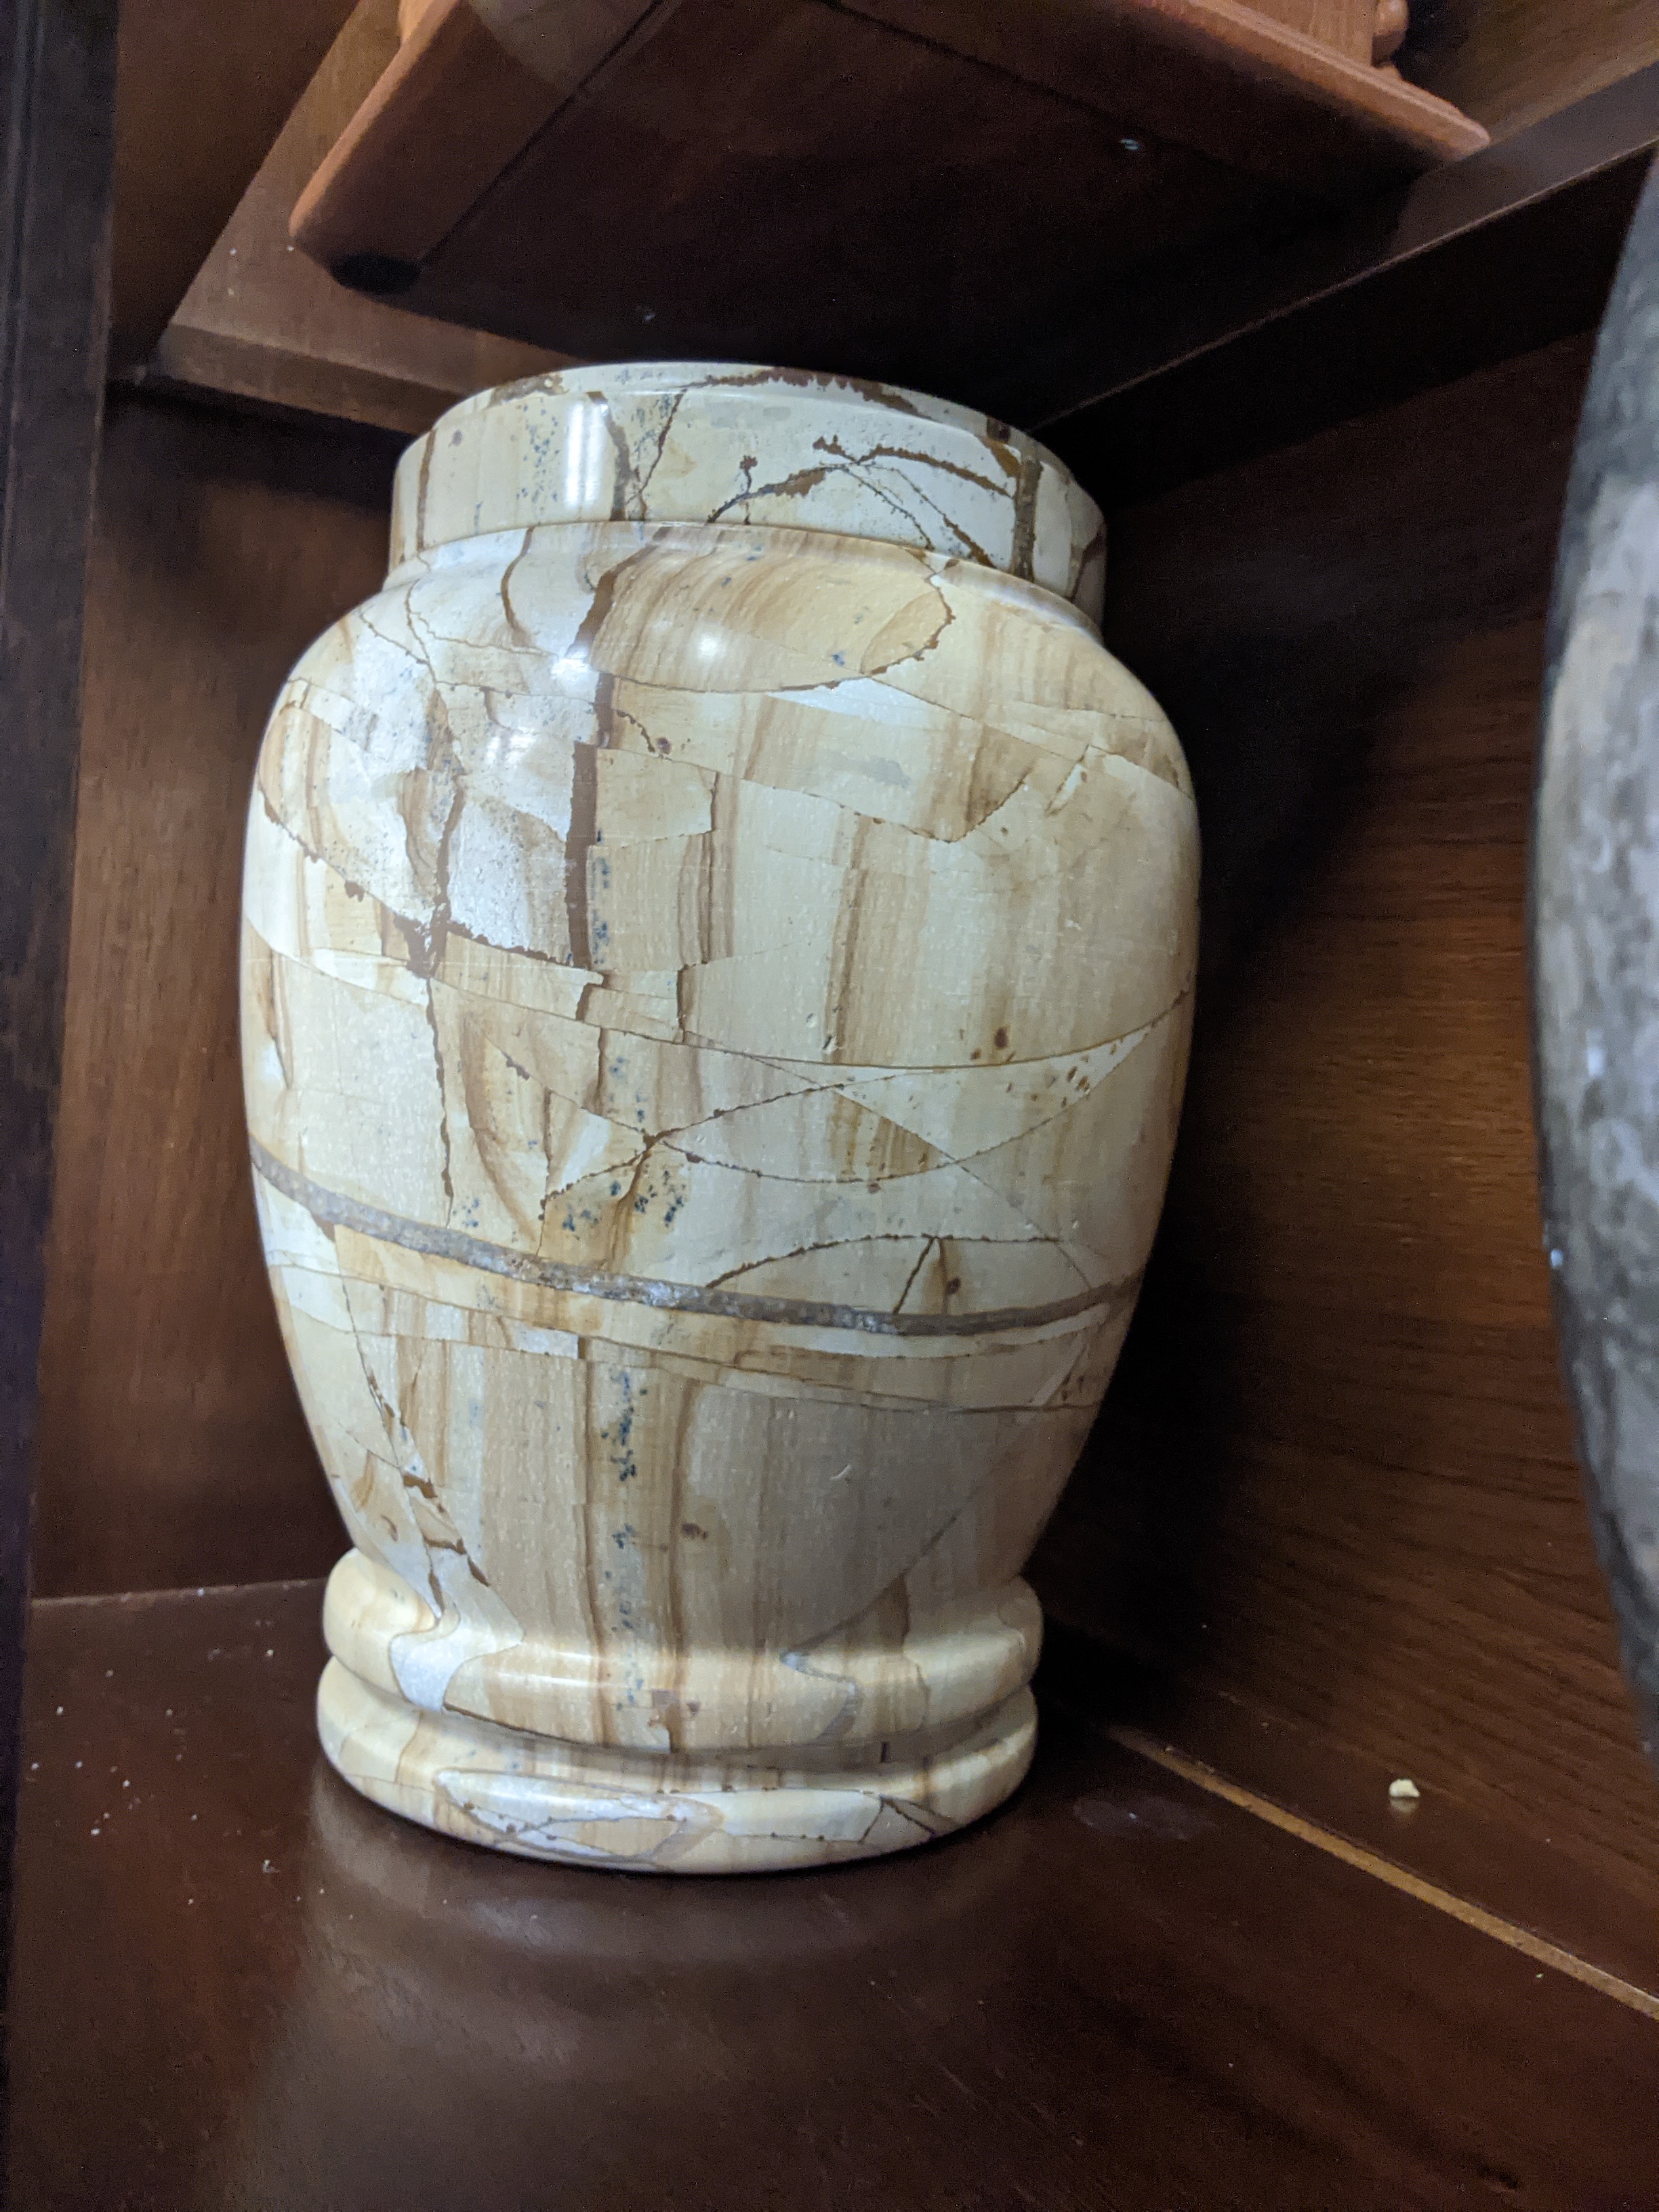 Beige Flat Top Stone Urn
$350.00